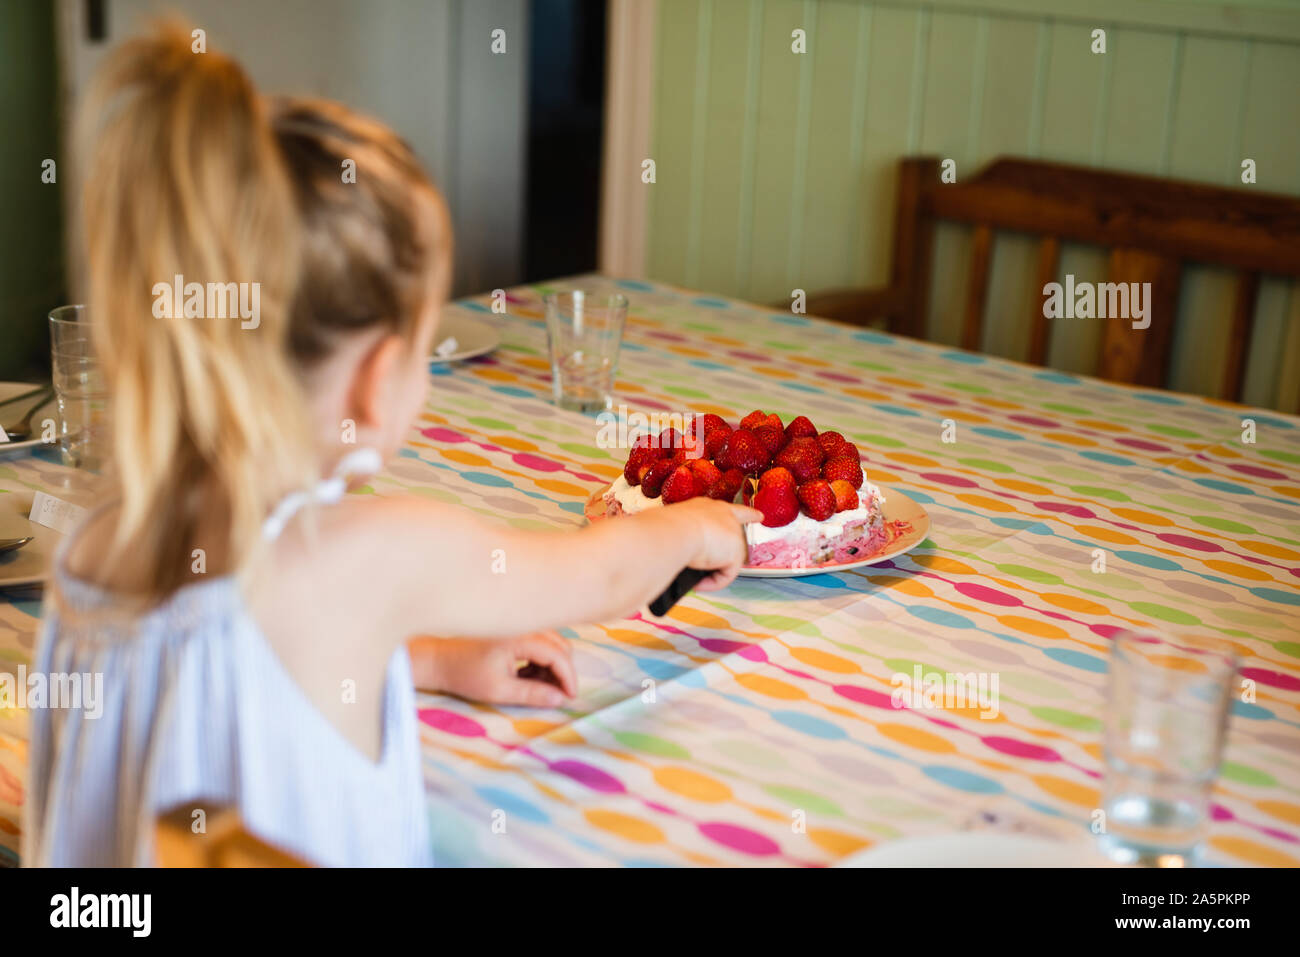 Girl cutting cake Stock Photo